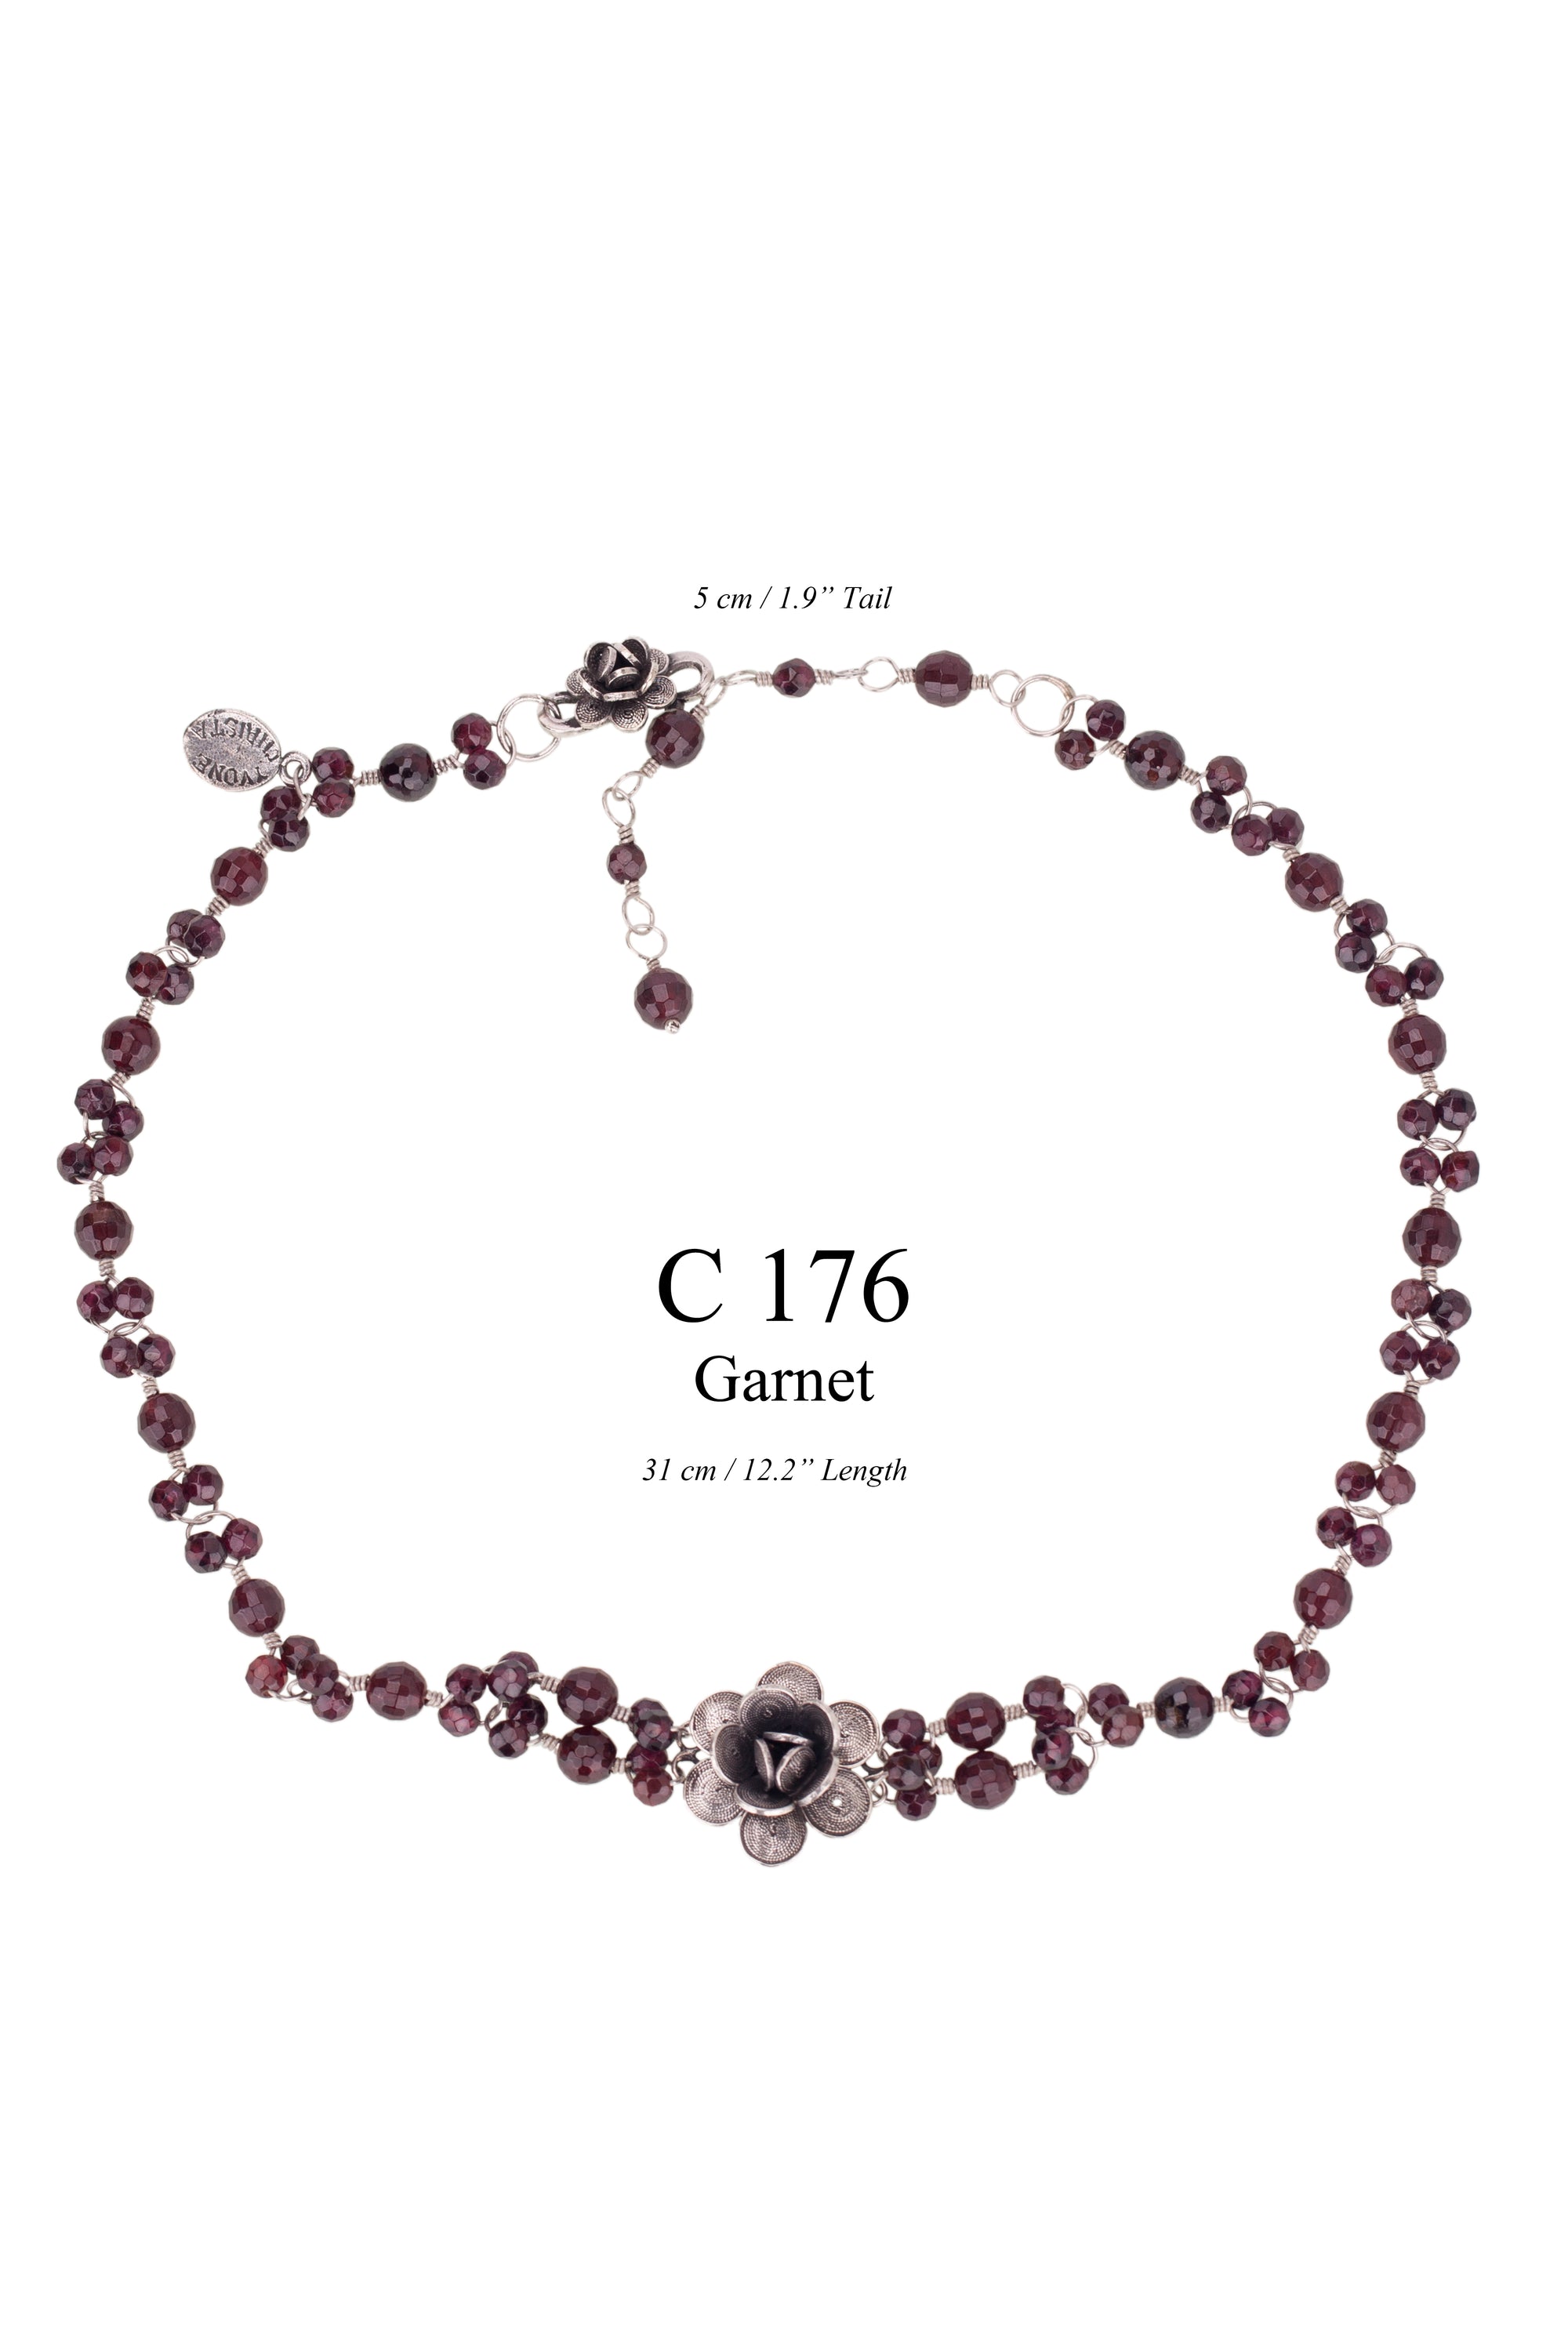 Single Rose garnet choker necklace